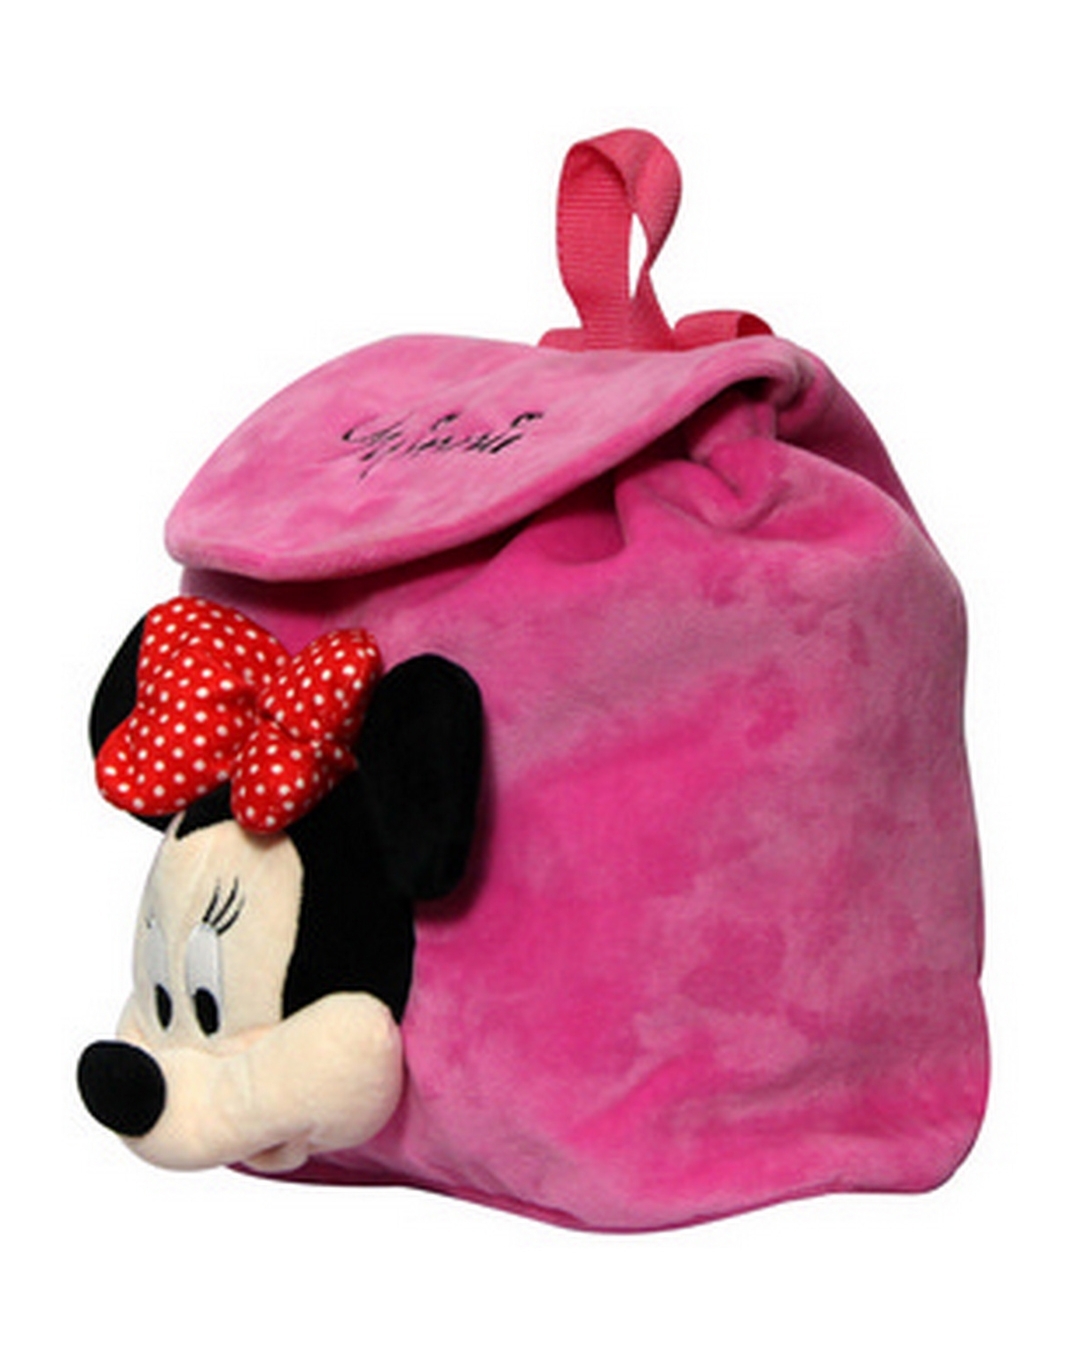 Disney Parks Minnie Mouse small purse bag | Small purse, Minnie mouse purse,  Pink bag